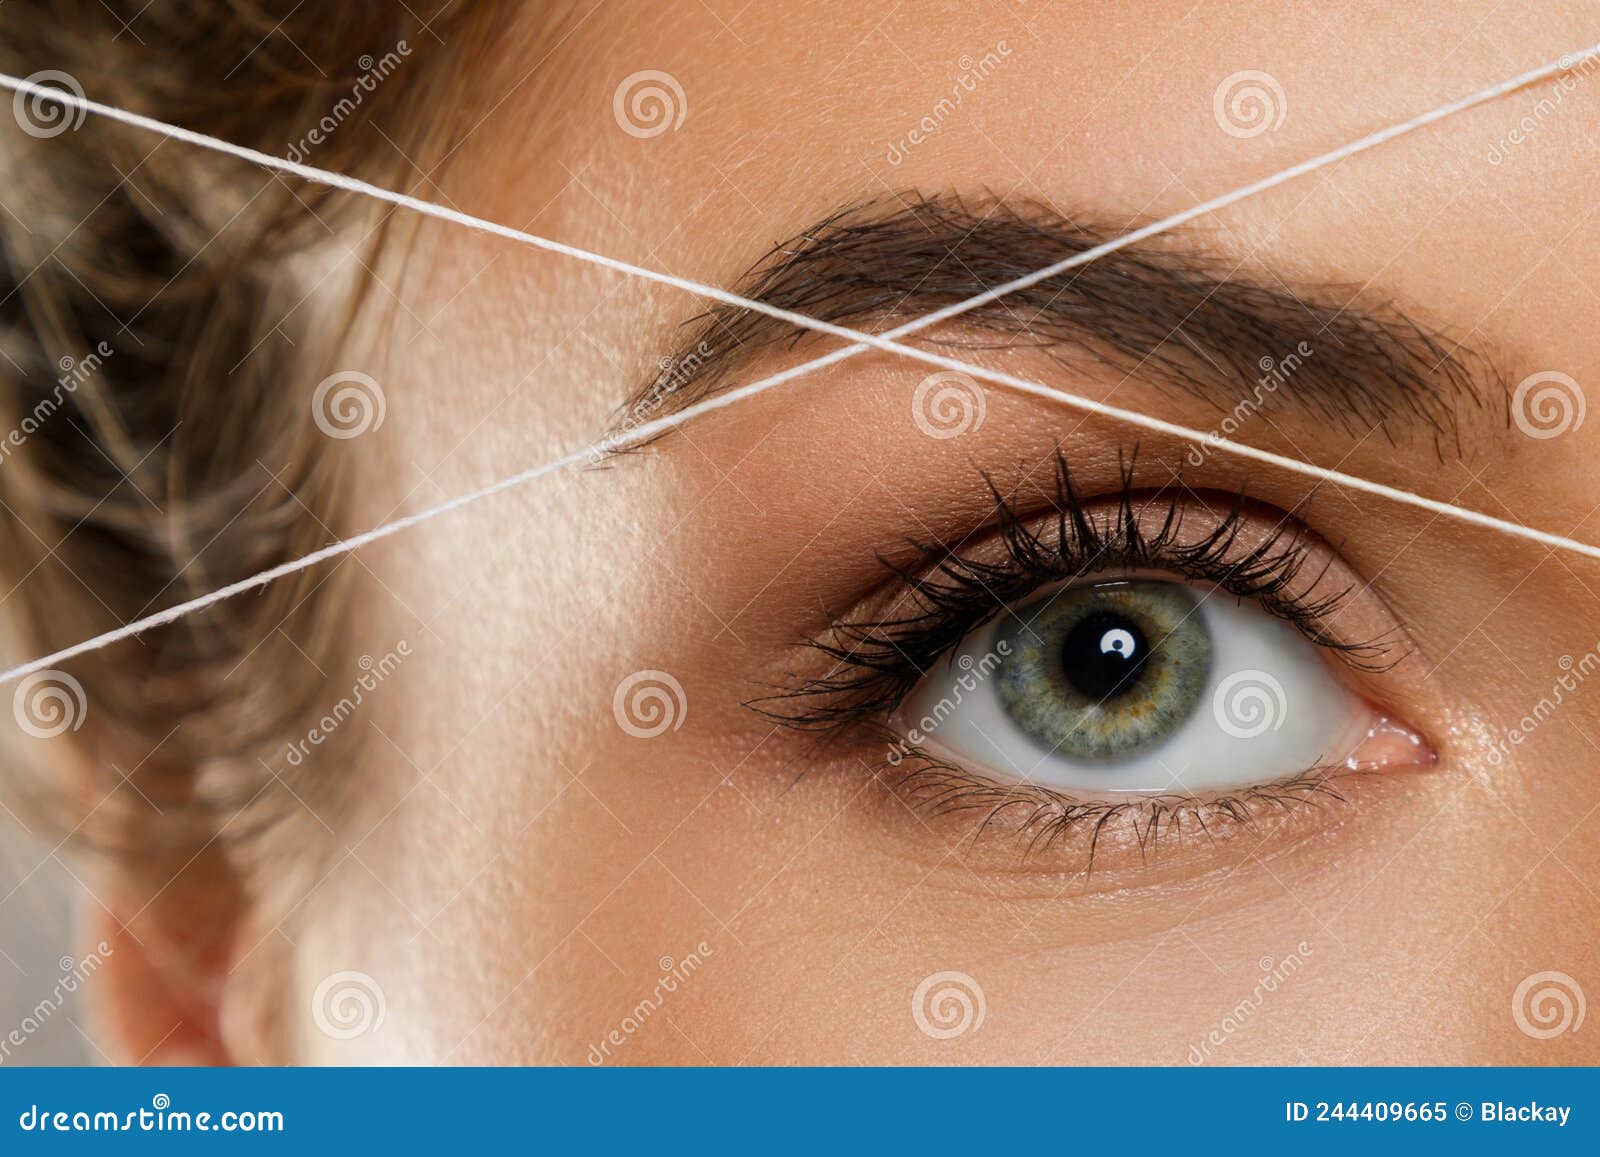 eyebrow threading - epilation procedure for brow  correction